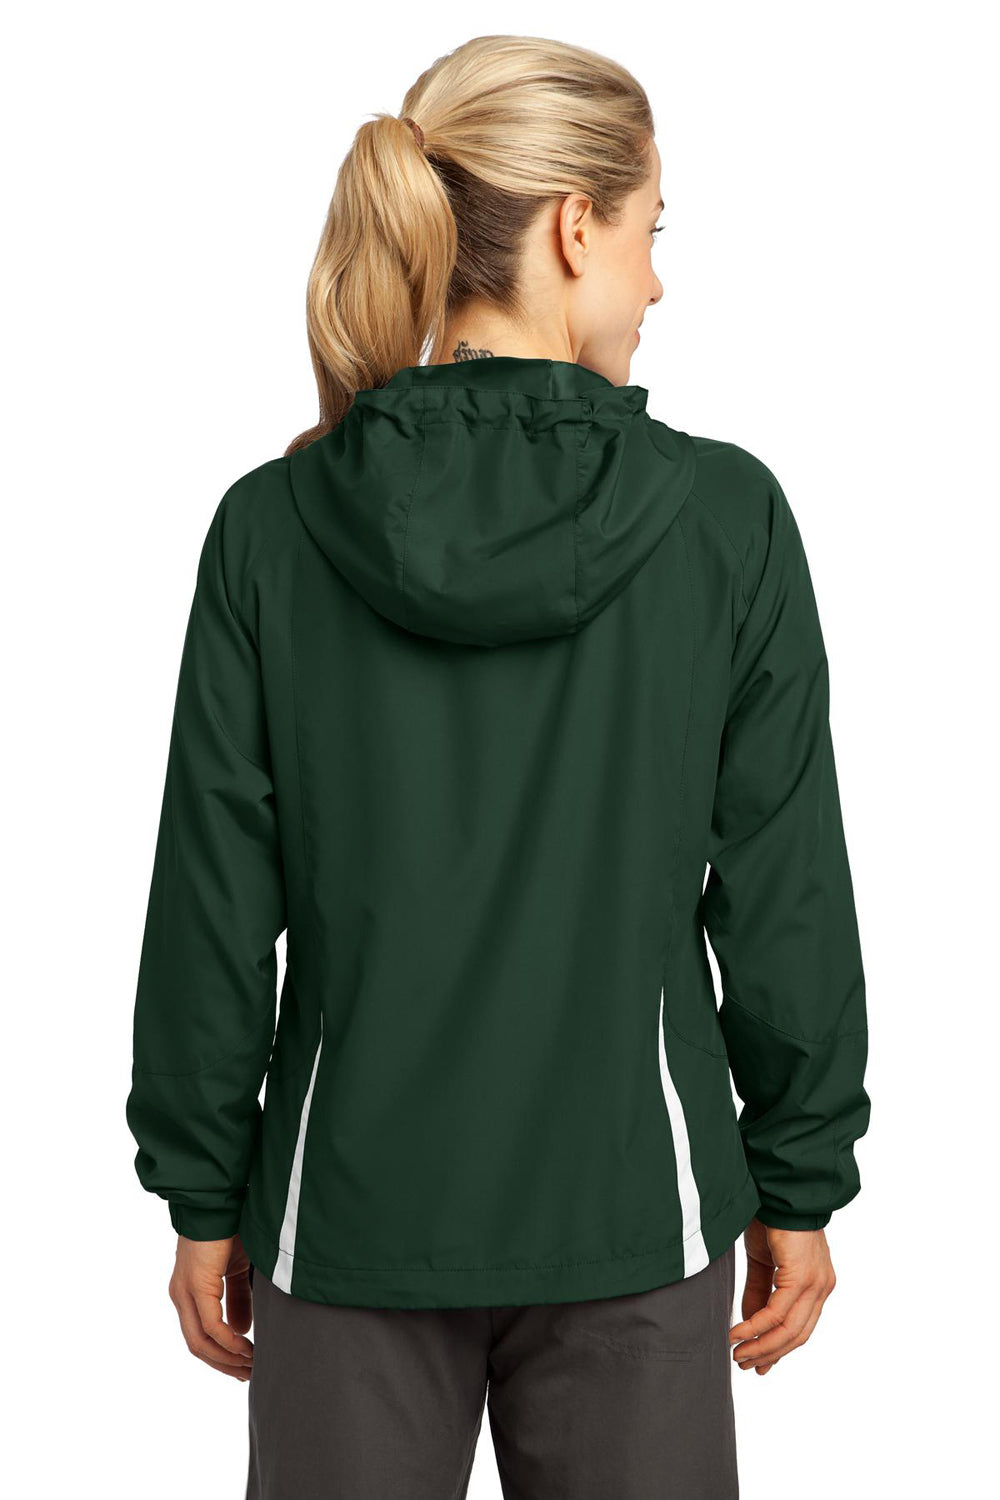 Sport-Tek LST76 Womens Water Resistant Full Zip Hooded Jacket Forest Green Back